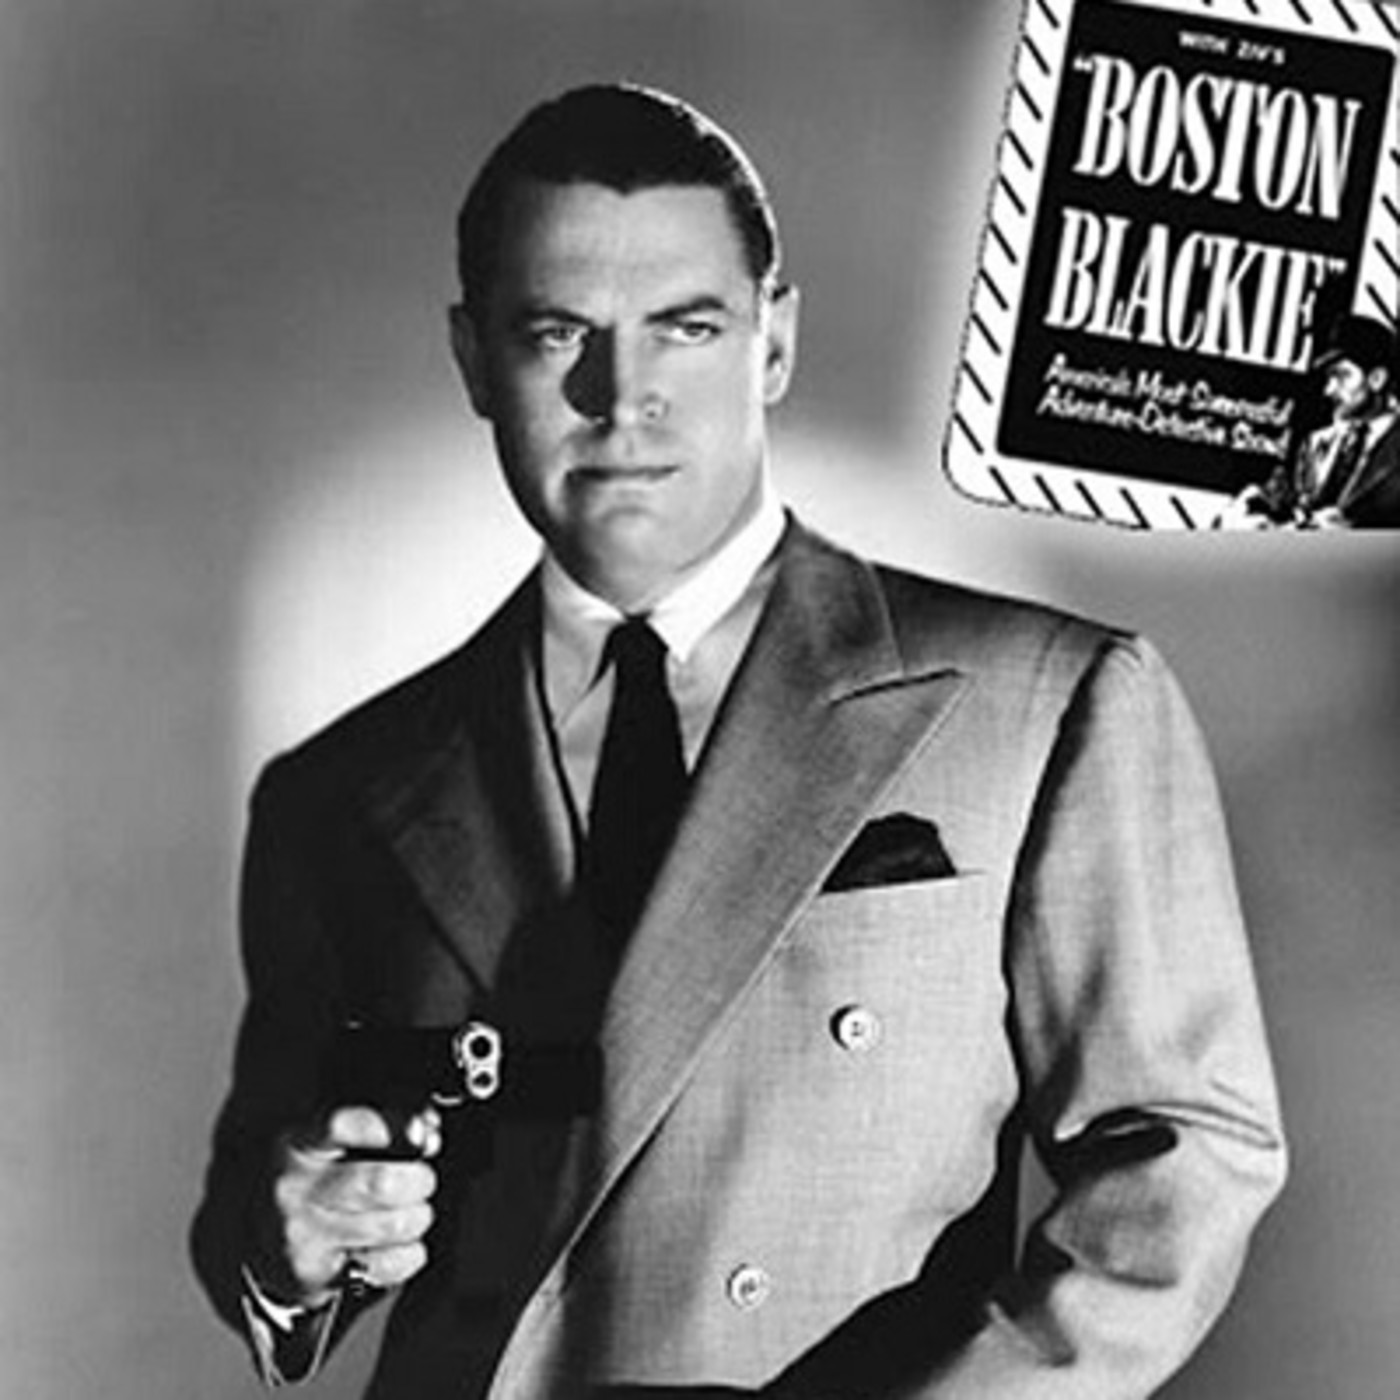 Boston Blackie - Charity Gambling Ring - 219